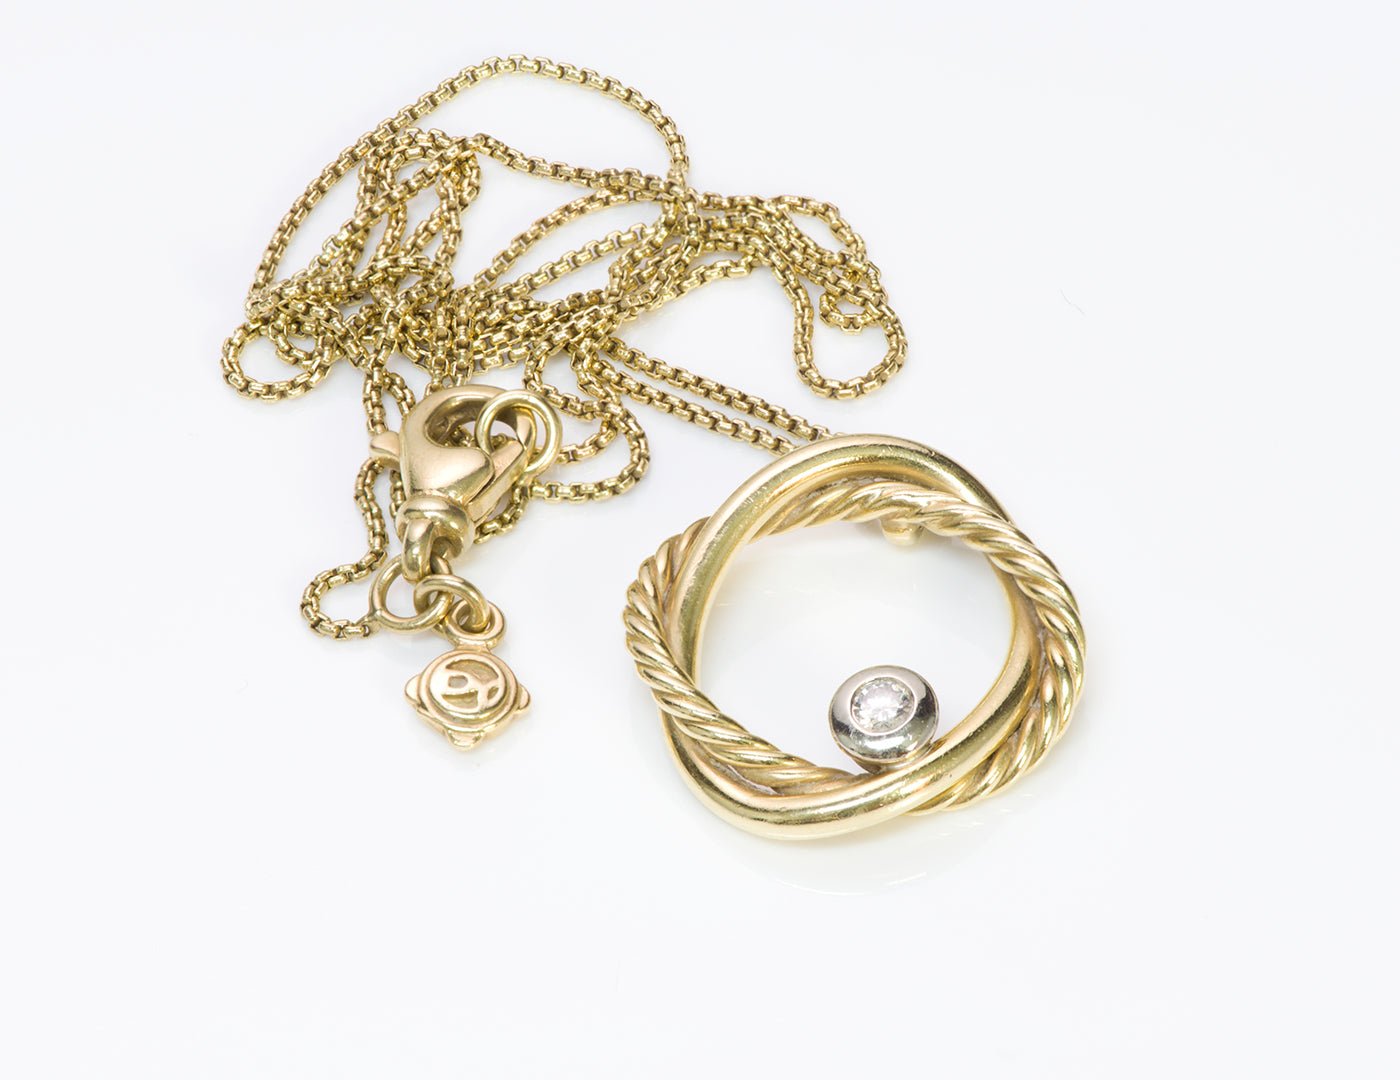 David Yurman 18K Gold Diamond Infinity Necklace Pendant